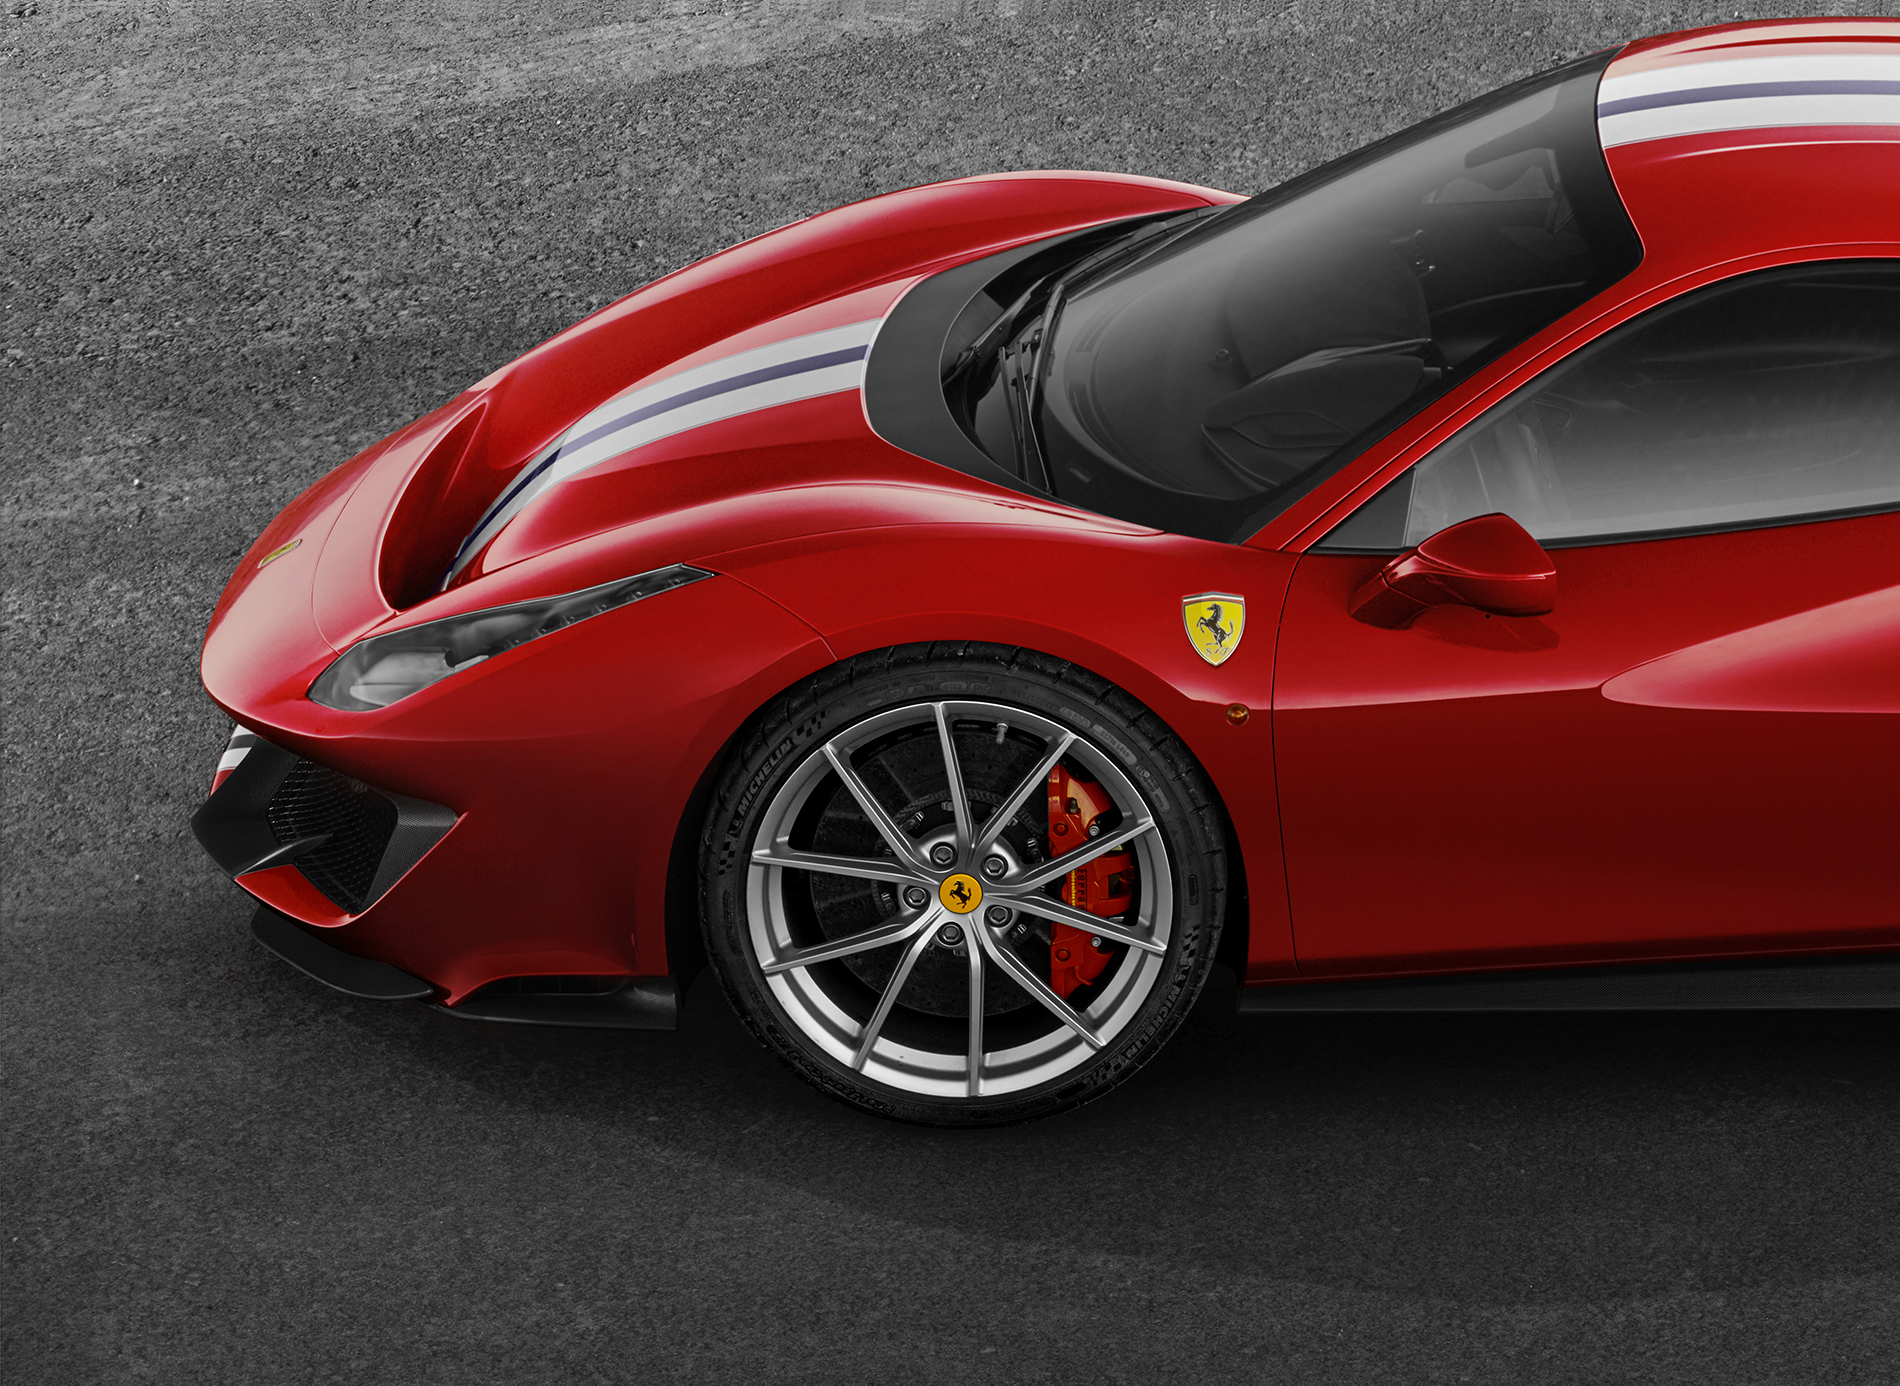 Ferrari in pole position as world’s strongest brand